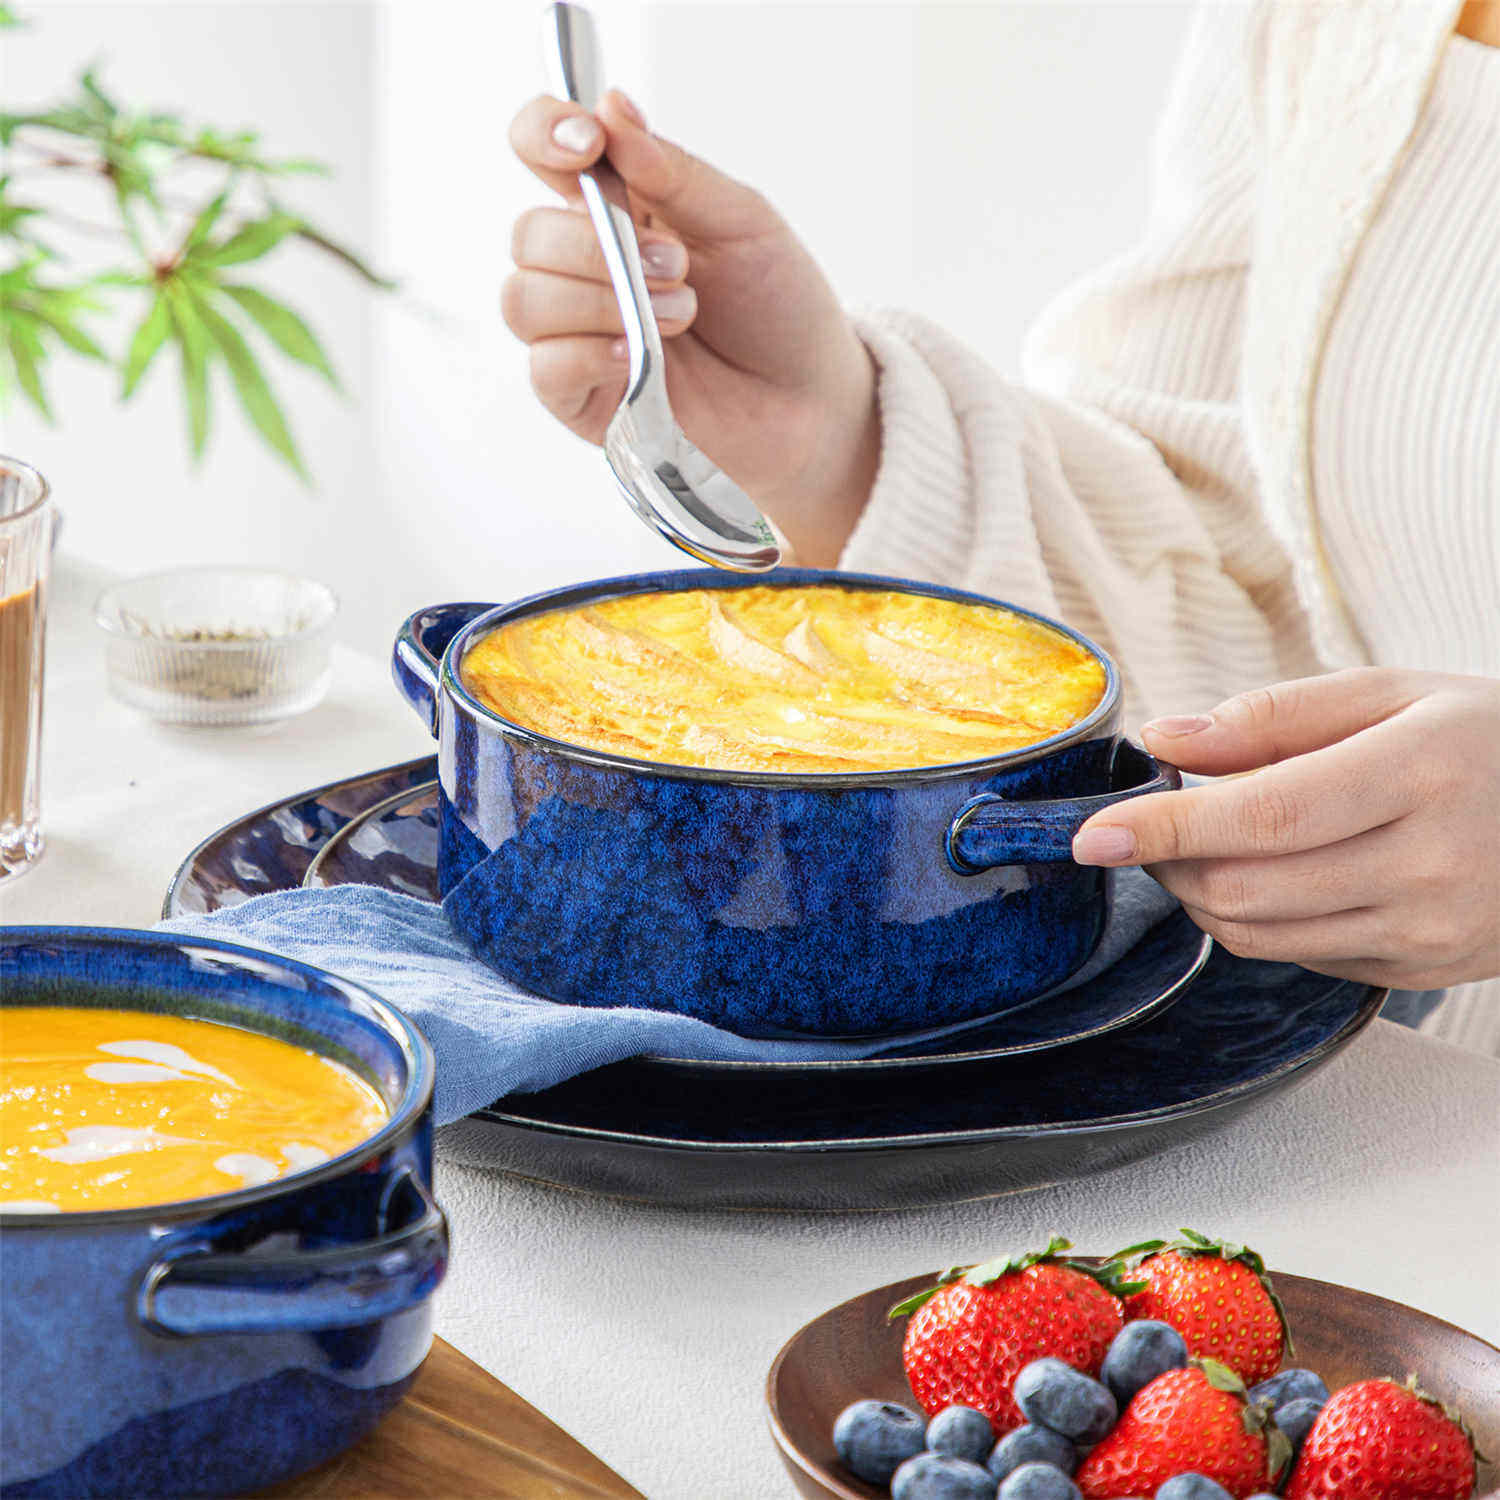 Reactive Glaze Starry Blue Handled Soup Bowls Set of 4-vancasso